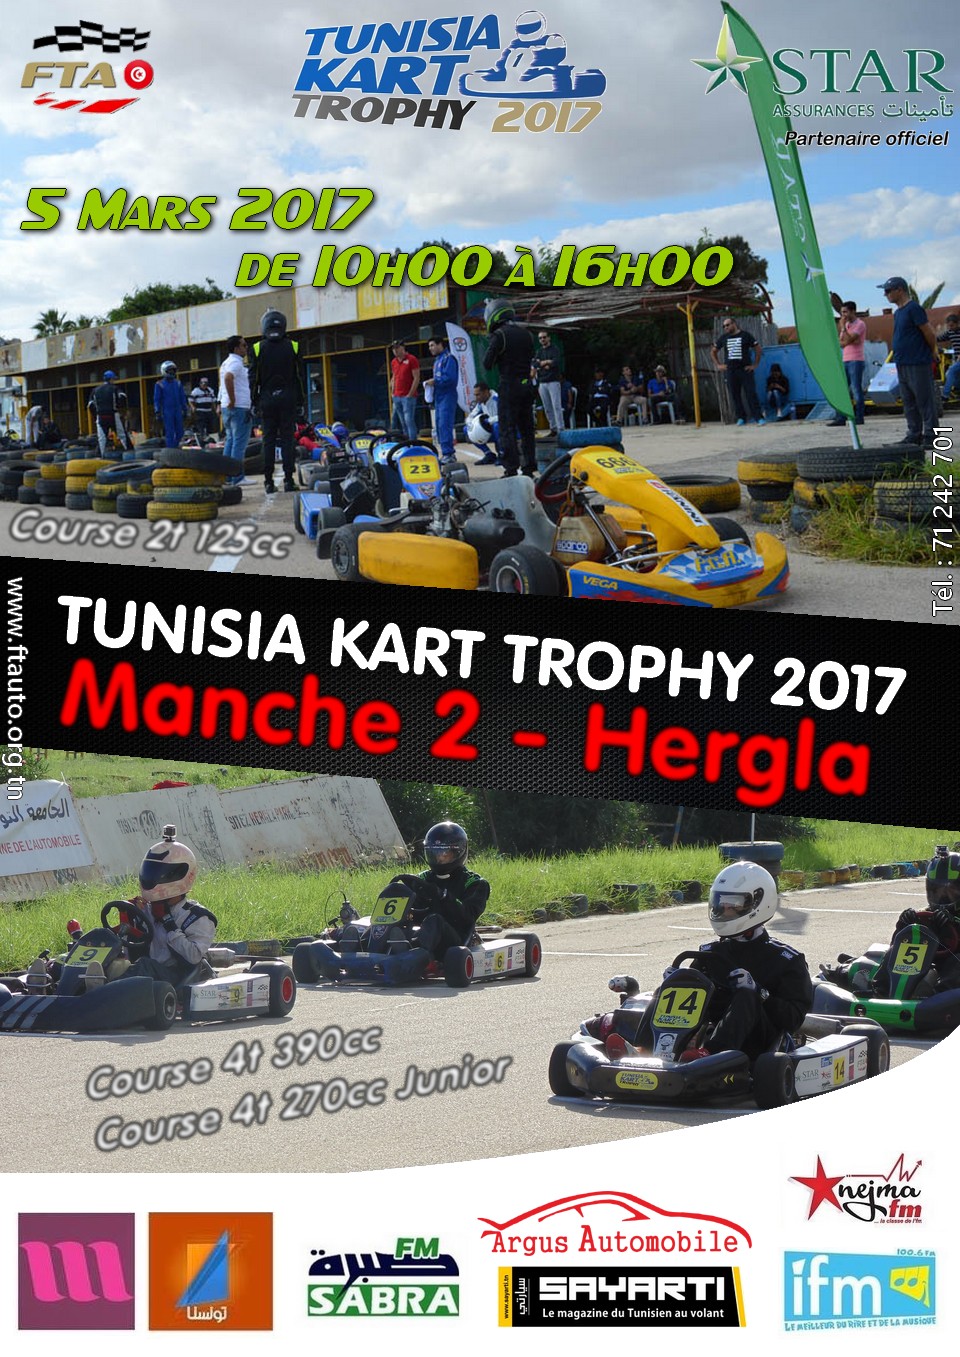 Manche 2 – Tunisia Kart Trophy 2017